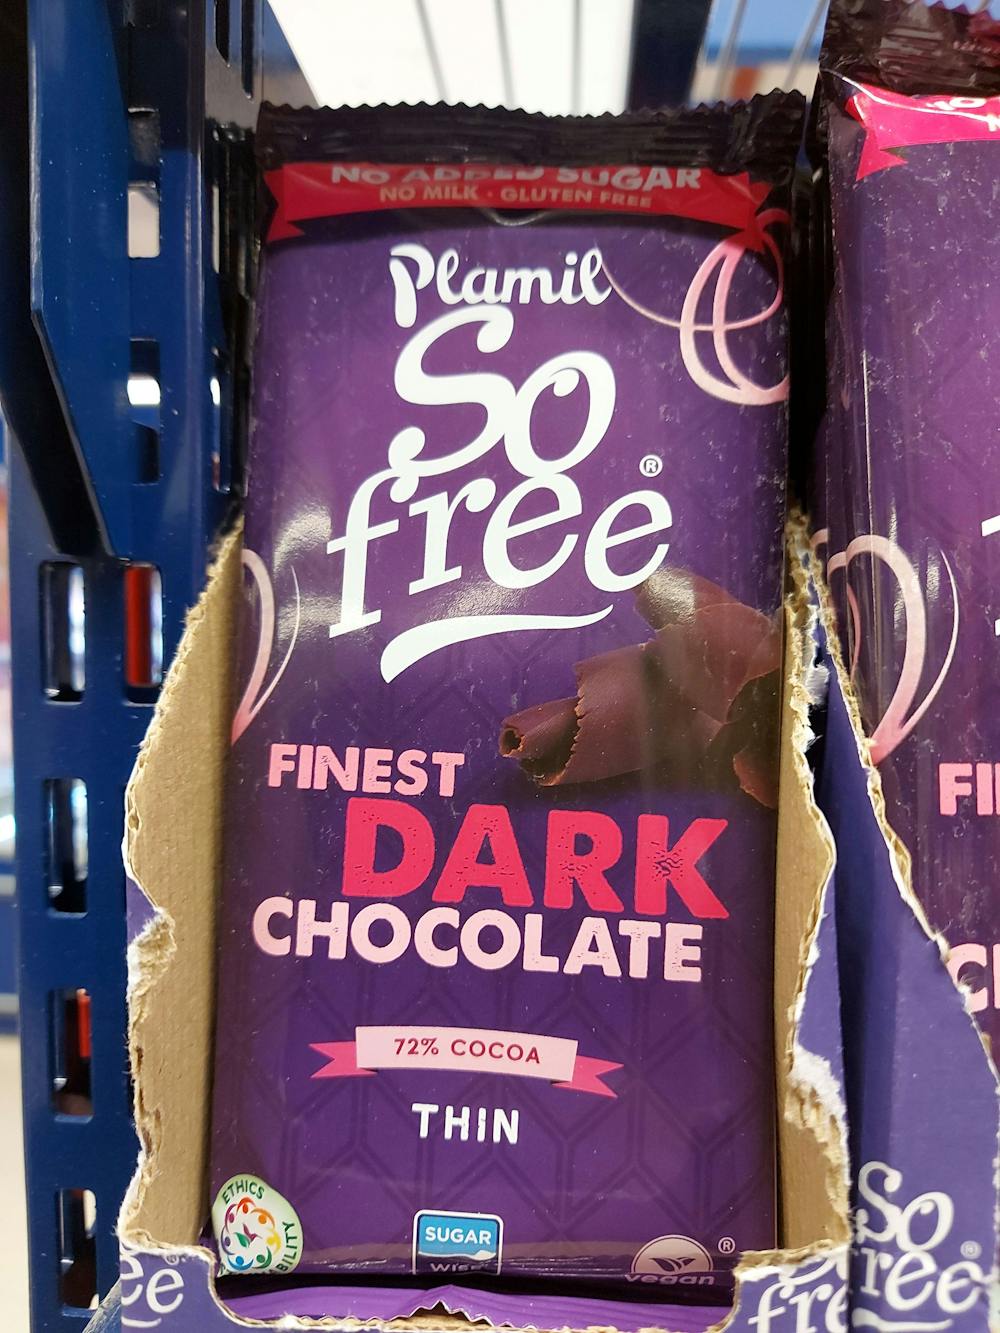 Finest dark chocolate, So free